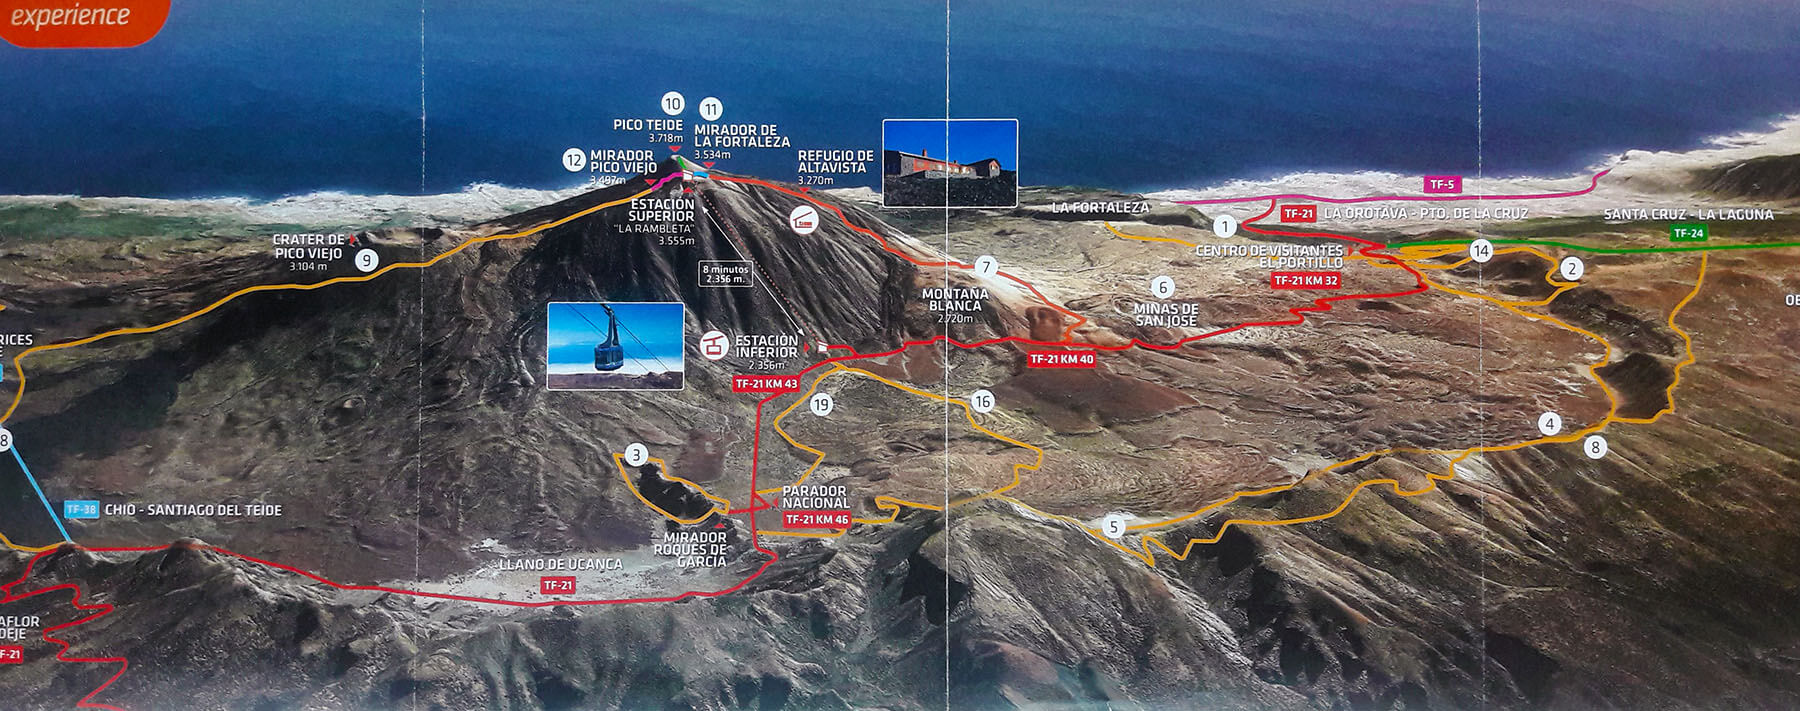 Mapa stezek kolem Pico de Teide na Tenerife